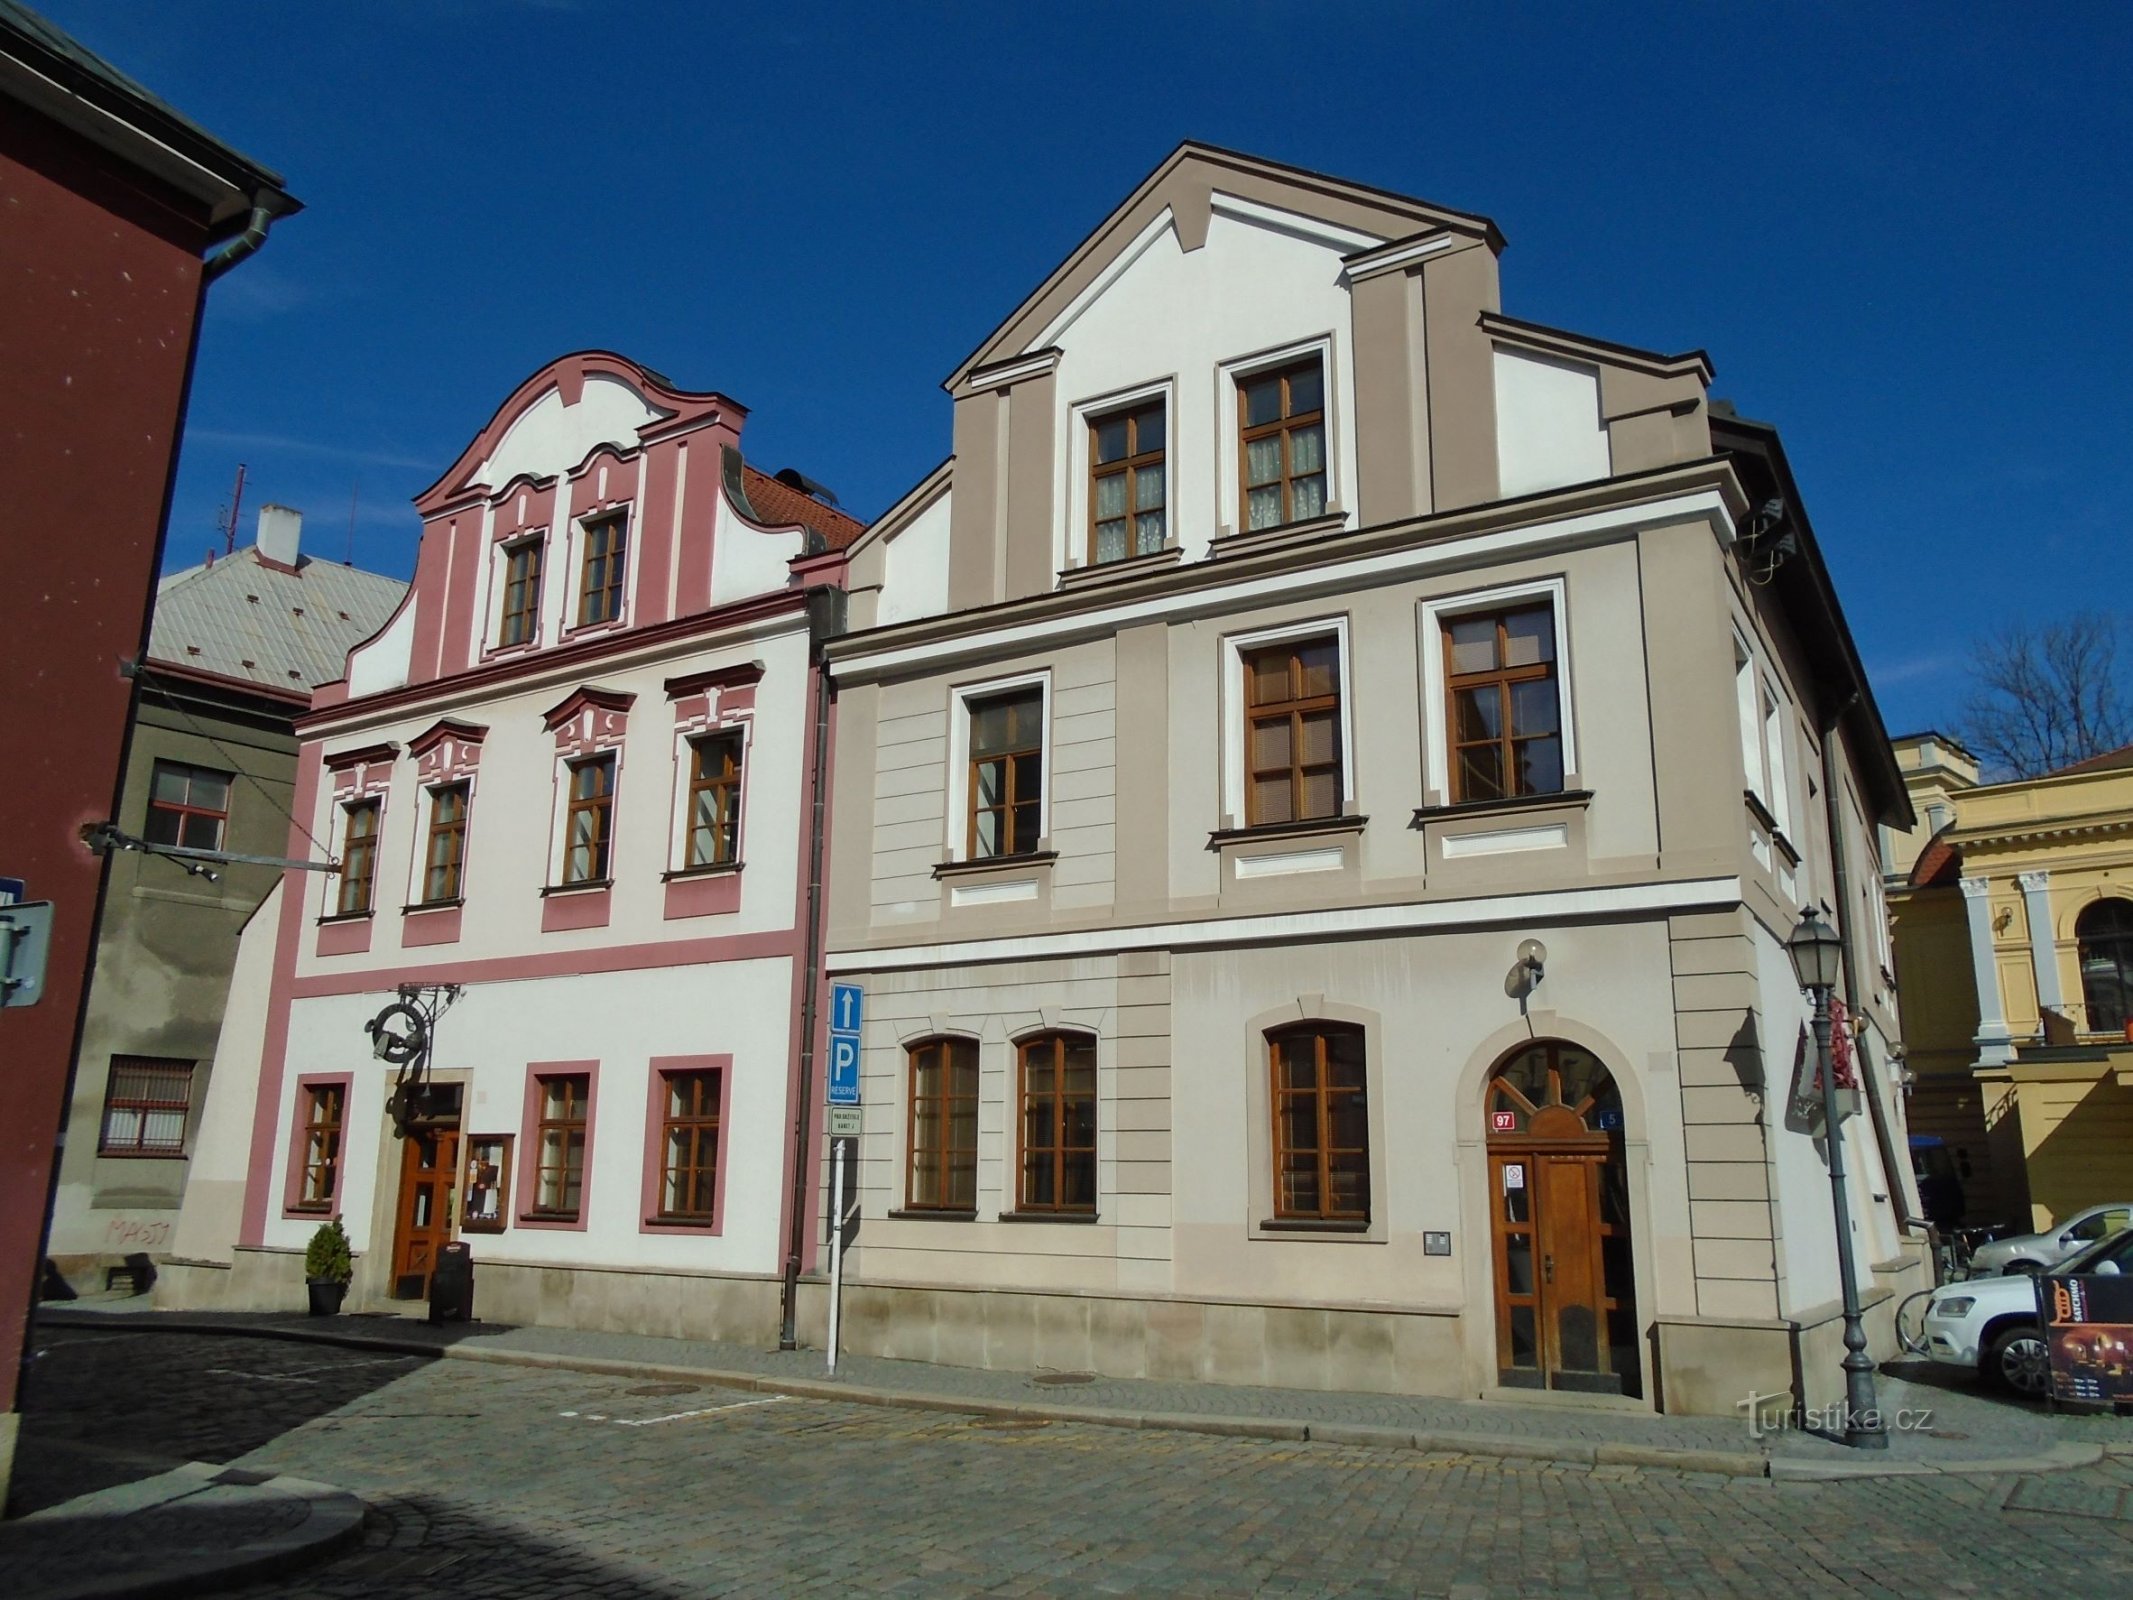 Lungo n. 96-97 (Hradec Králové, 5.4.2018 agosto XNUMX)